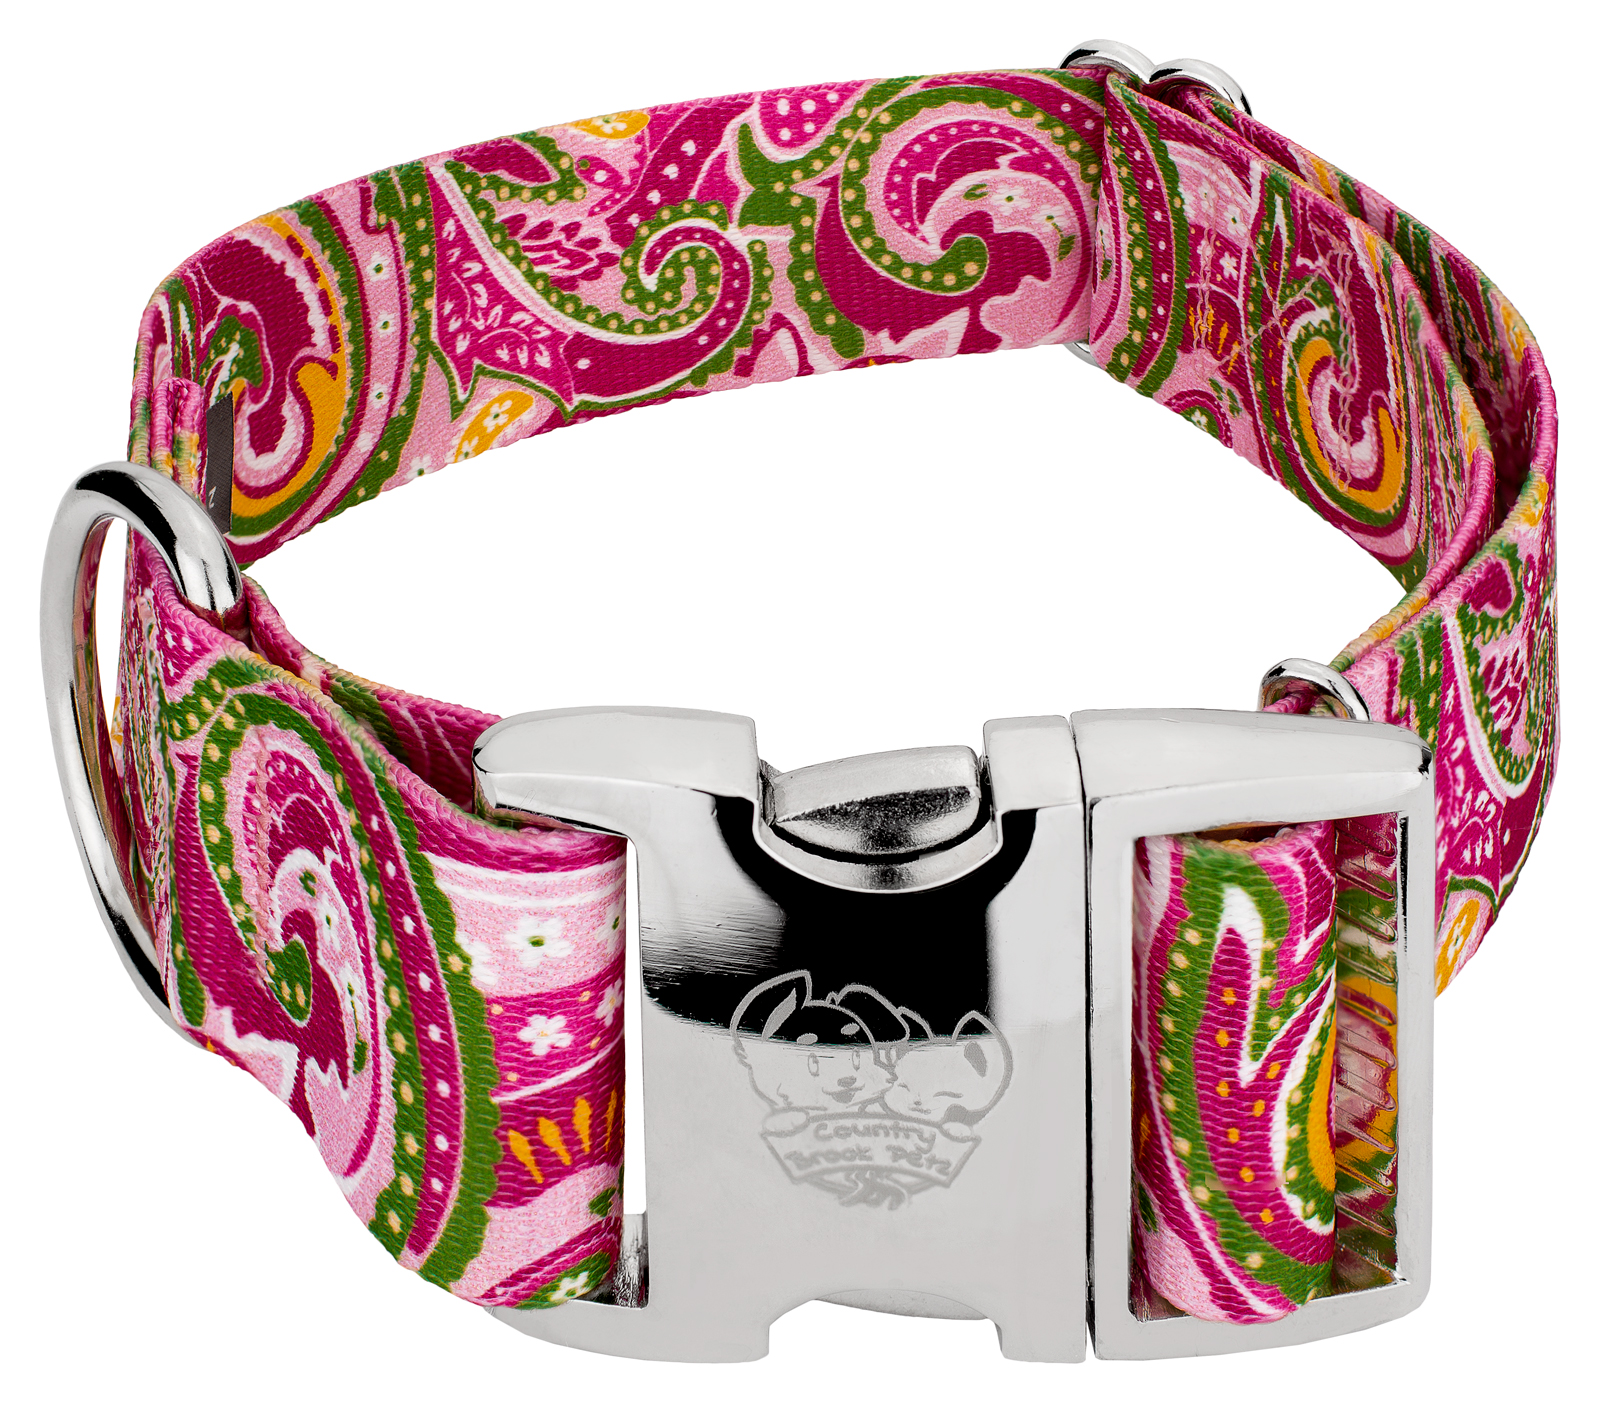 Country Brook Petz® 1 1/2 inch Premium Pink Paisley Dog Collar, Medium - image 1 of 10